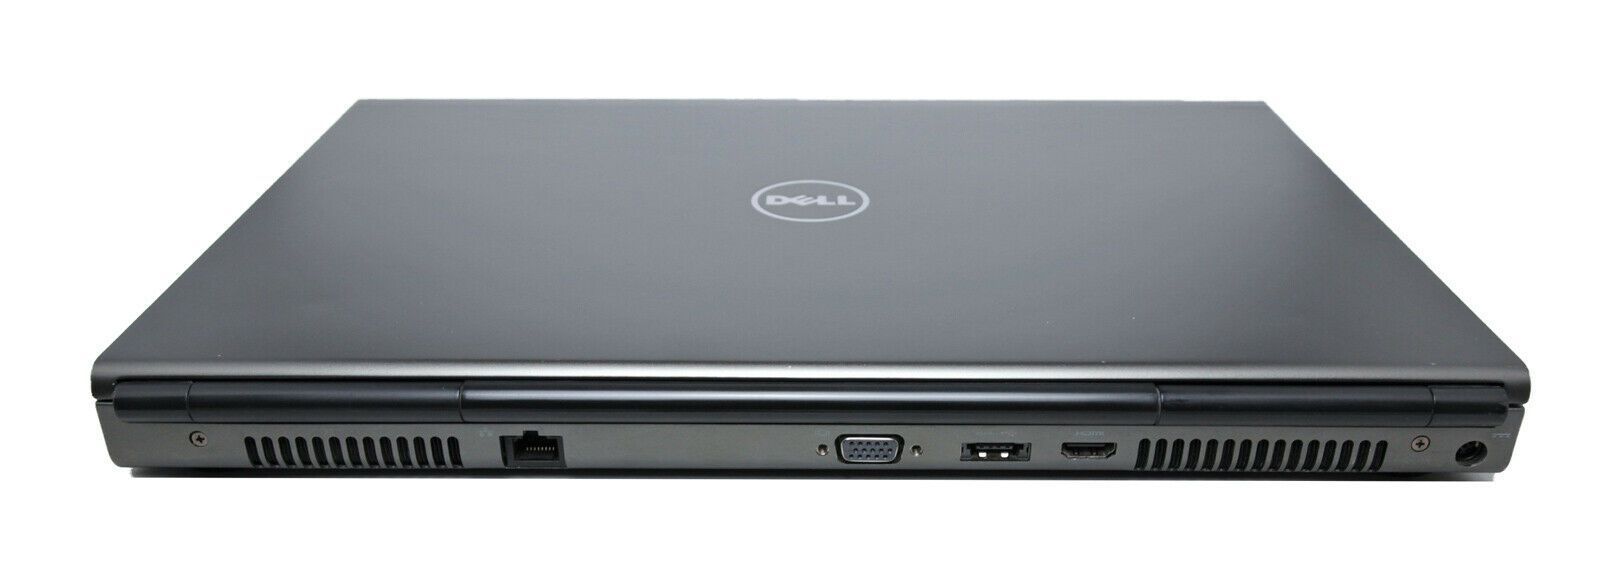 Dell Precision M4800 CAD 15.6 Laptop: Core i7-4940MX, 16GB RAM, 480GB SSD, VAT - CruiseTech